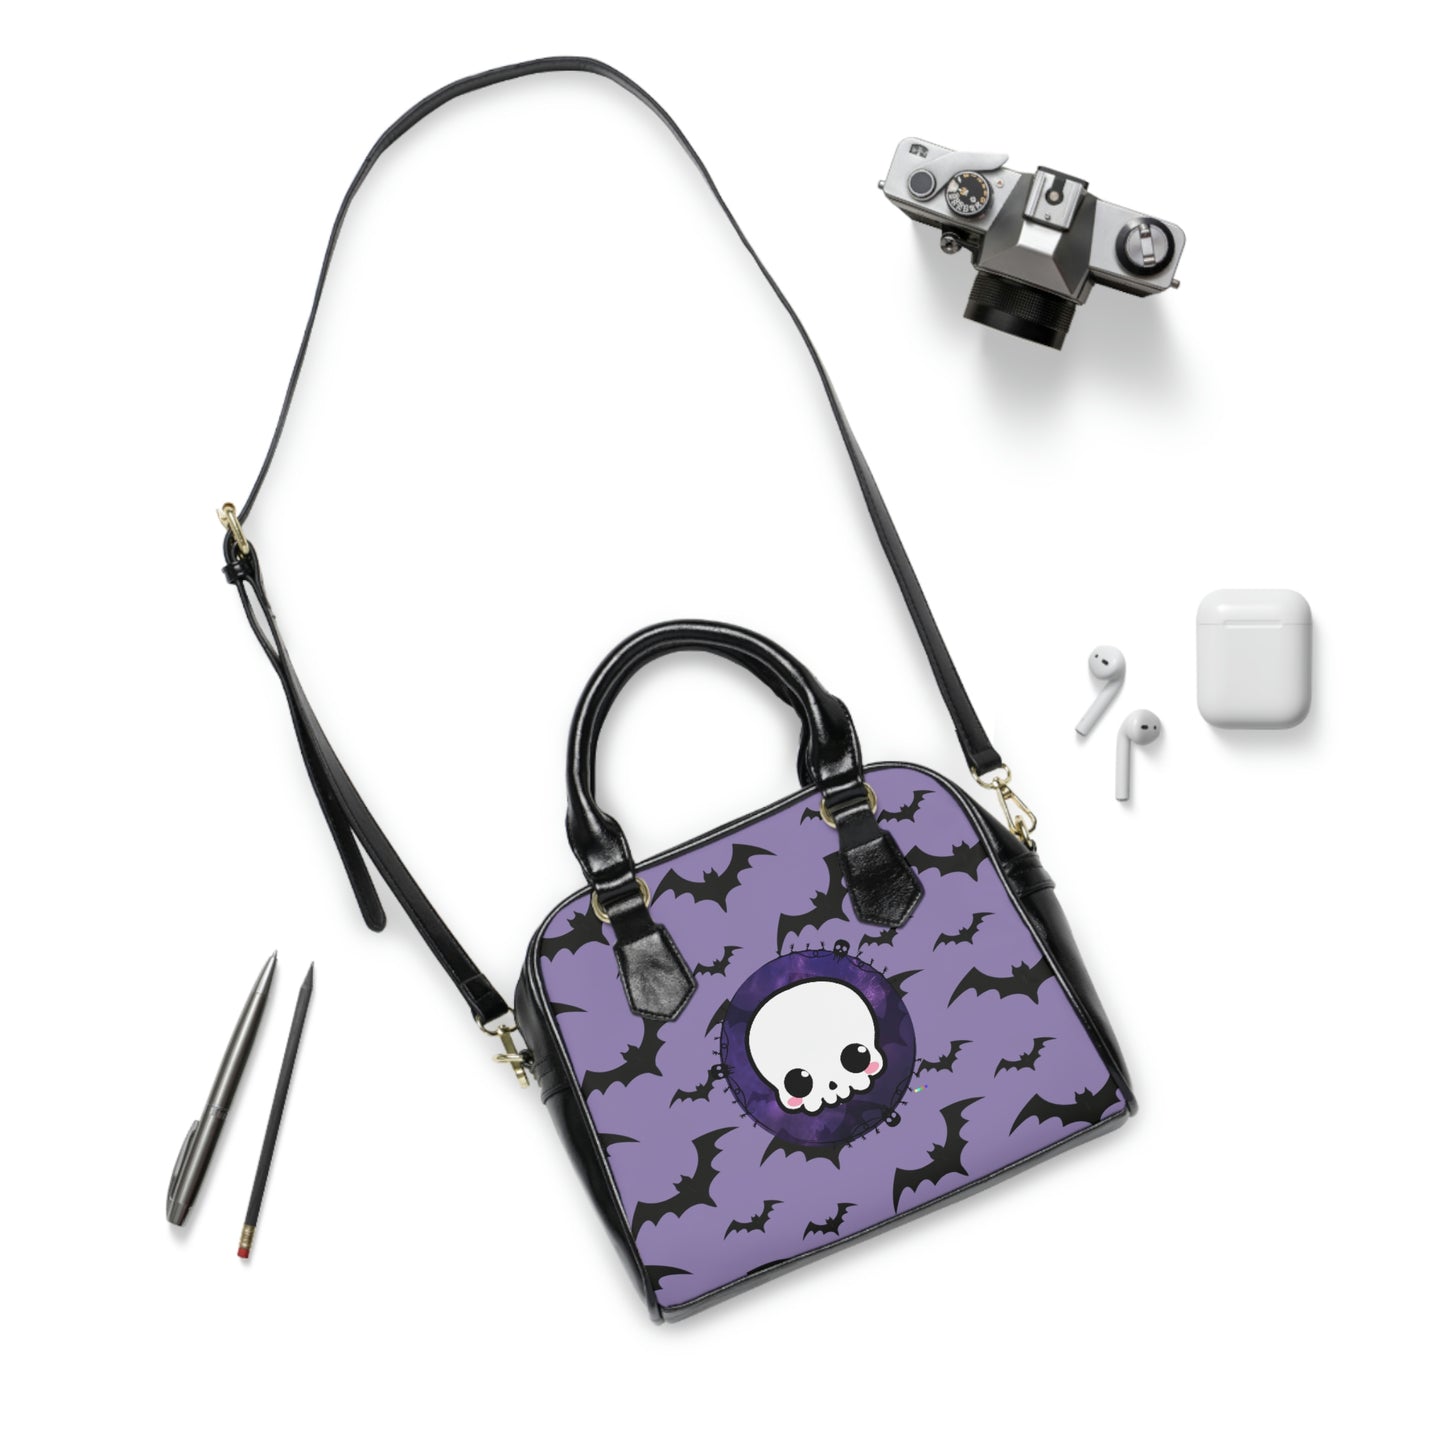 Skull and Bats Pastel Goth Kawaii Shoulder Handbag